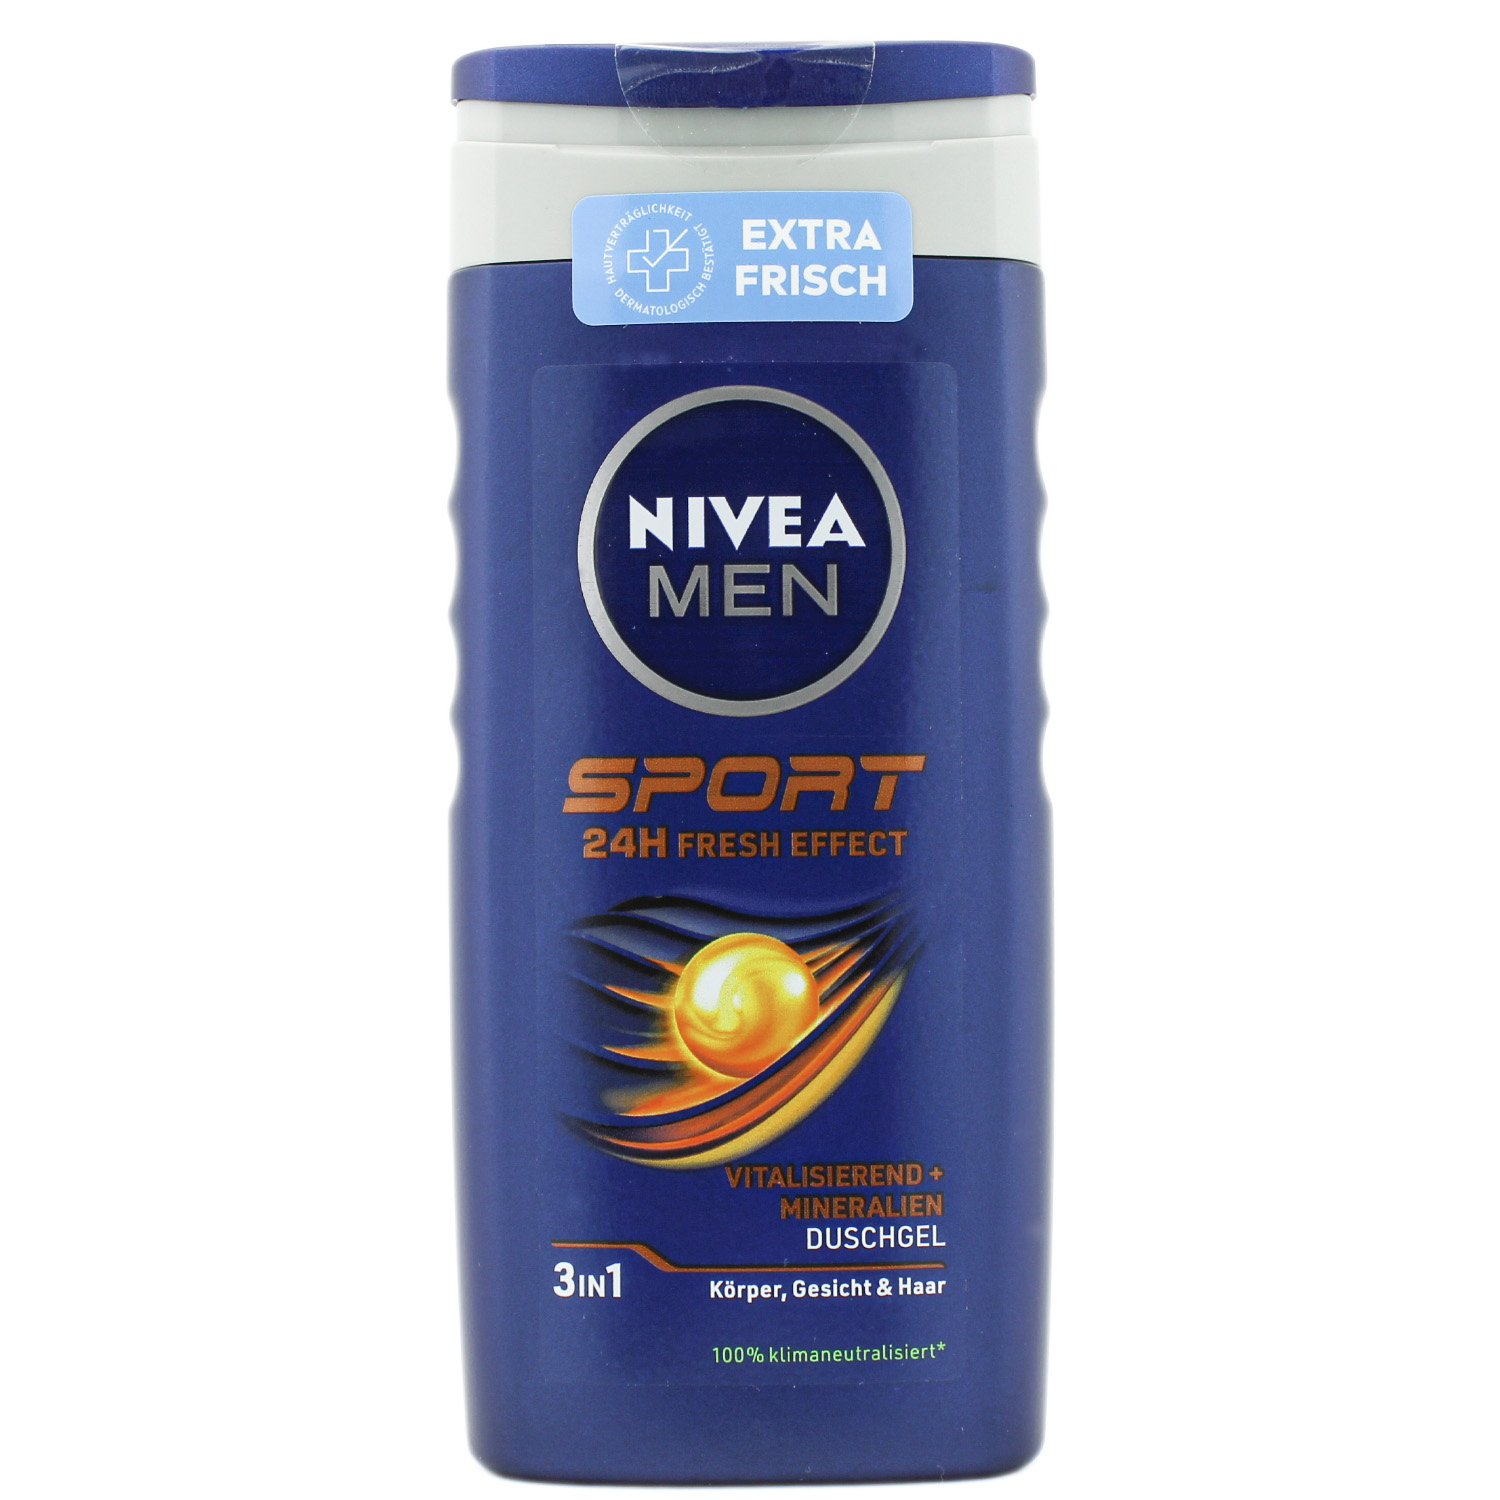 Nivea Men Sport 24H Fresh Effect 3in1 Pflegedusche 250ml